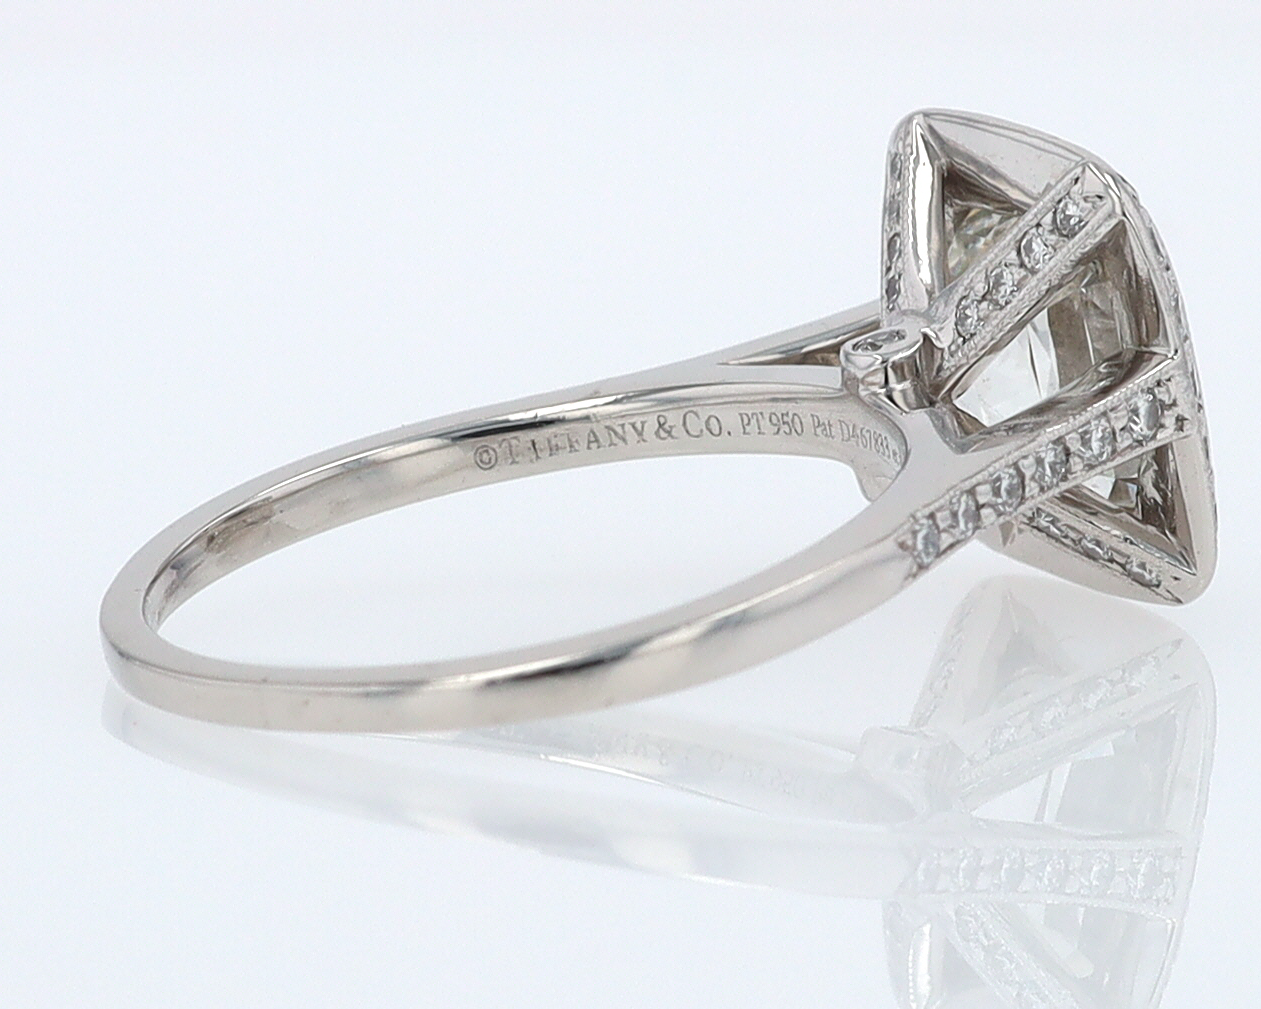 SOLD Tiffany & Co. 2.81 Carat Cushion Diamond Engagement Ring